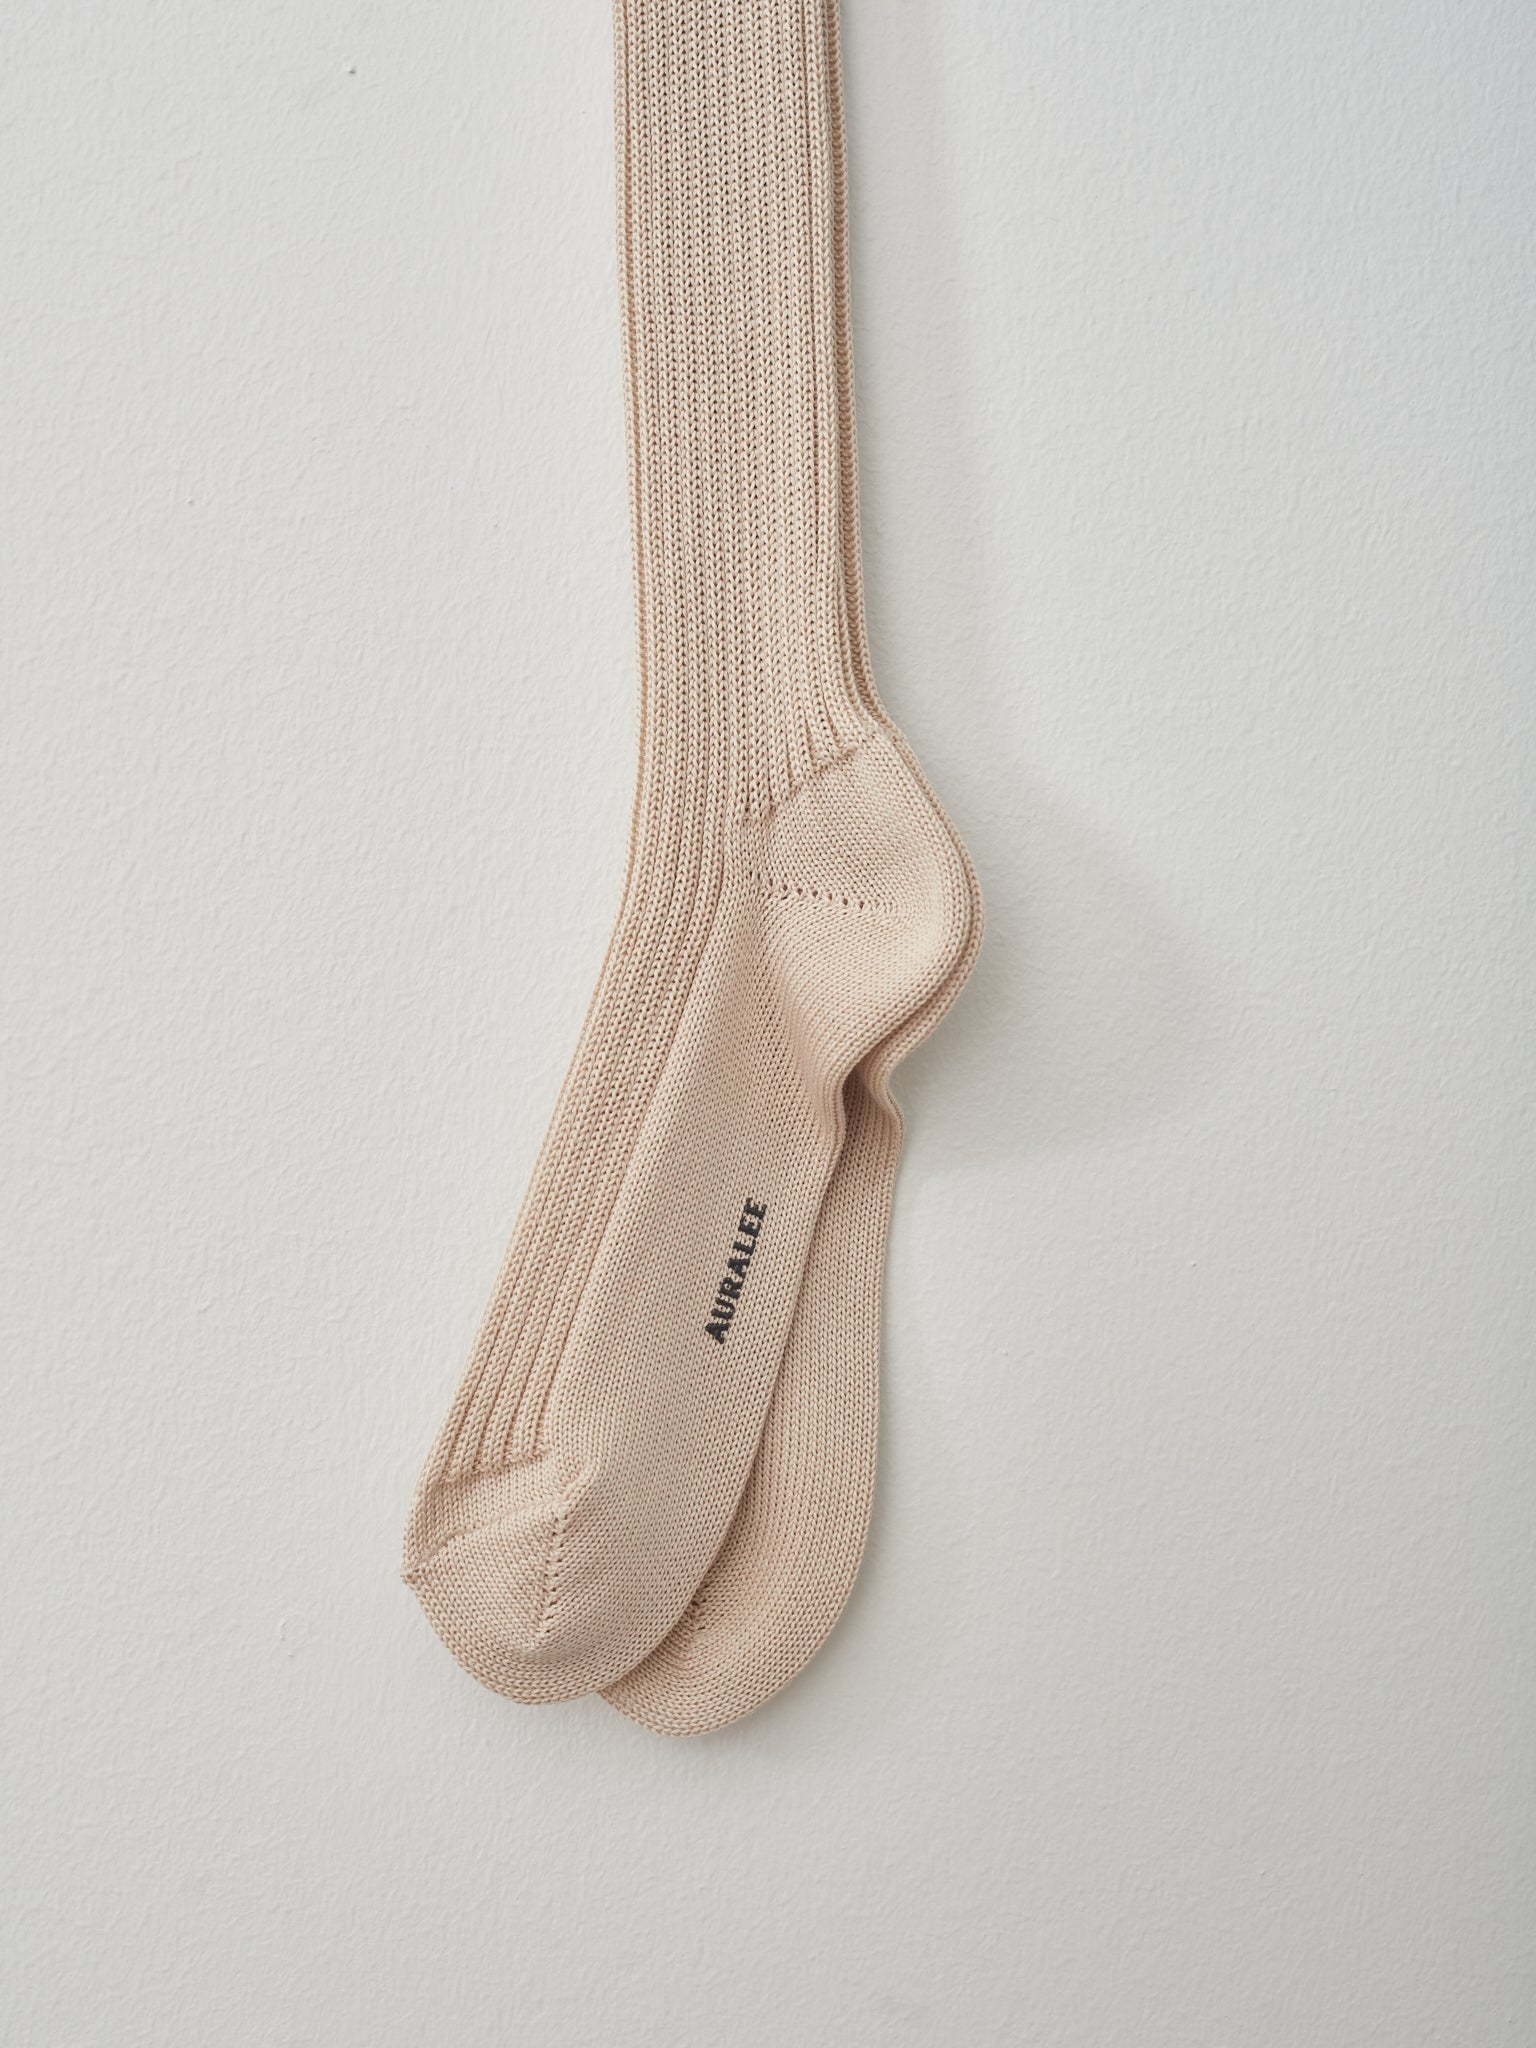 Namu Shop - Auralee Men's Cotton Rib Low Gauge Socks - Beige, Black